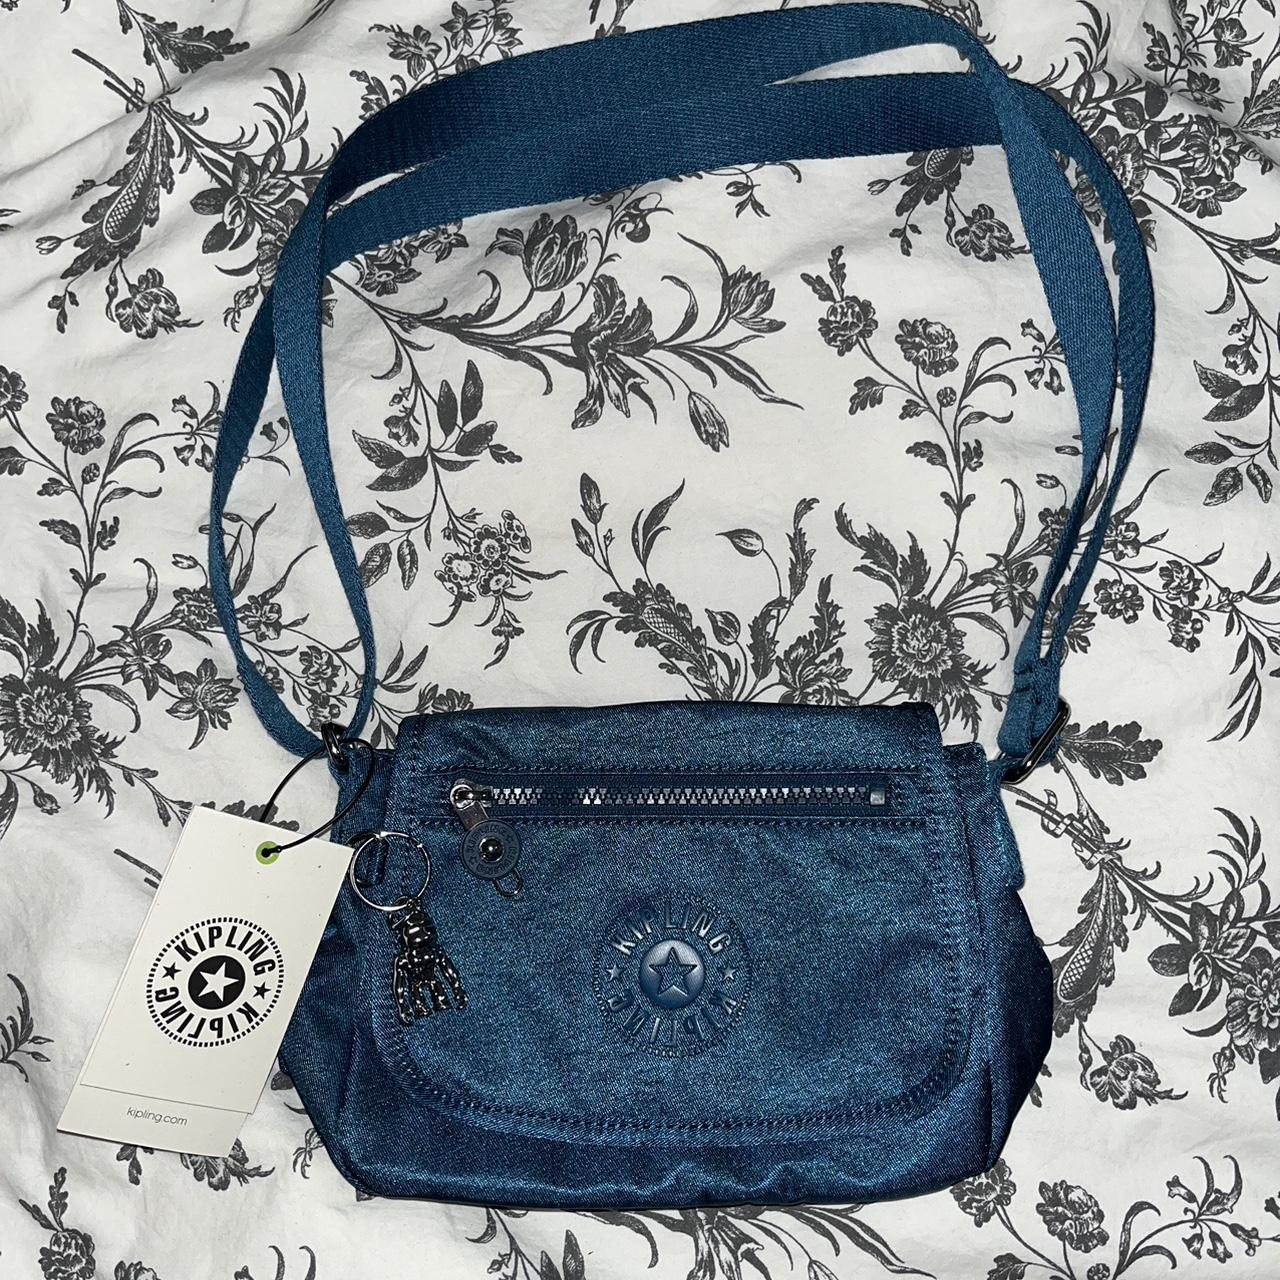 📌Kipling turquoise handbag - comes with metal... - Depop